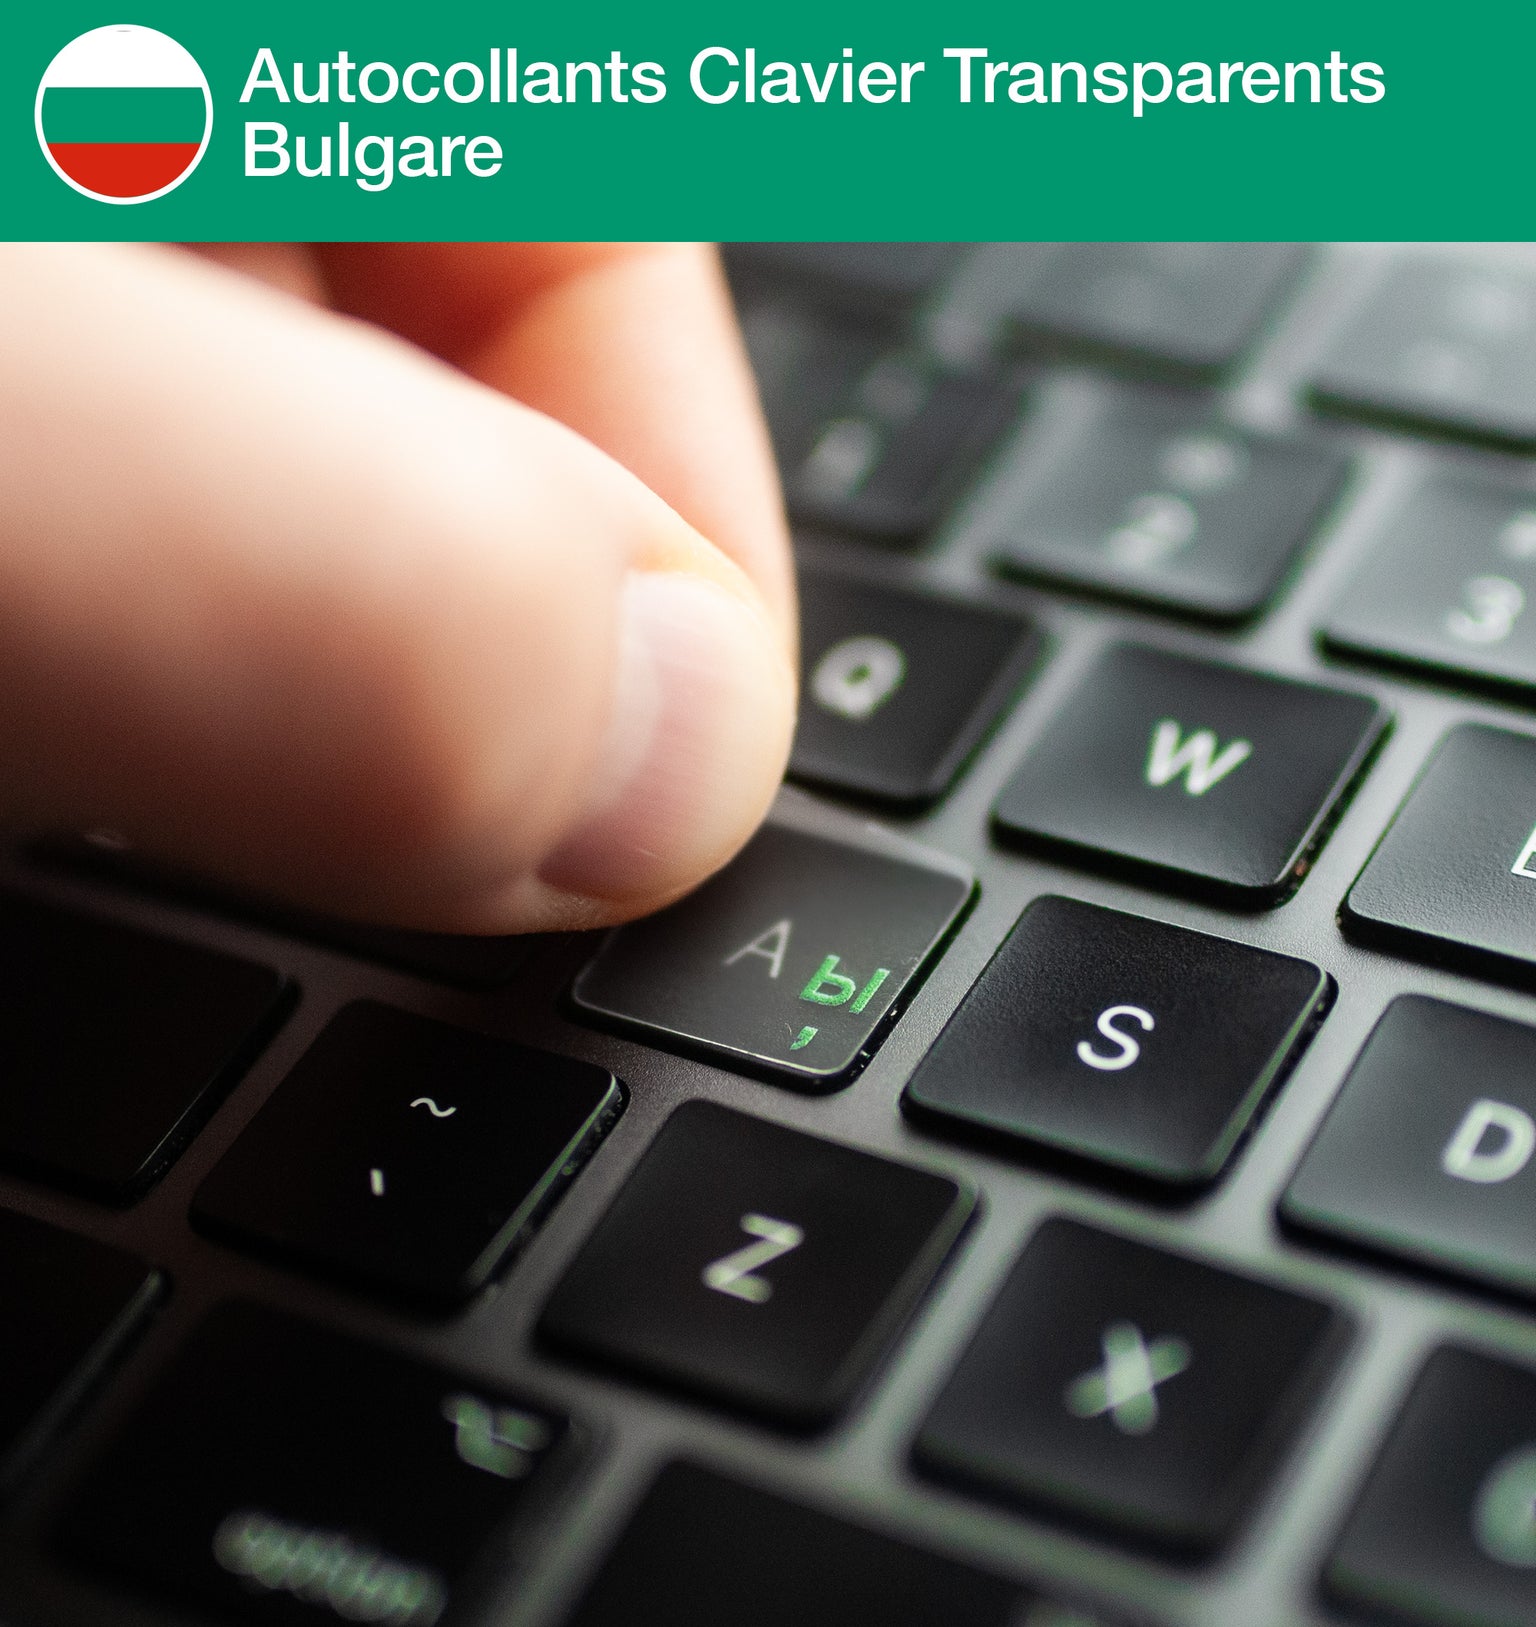 Stickers Autocollants Clavier Transparents Bulgare